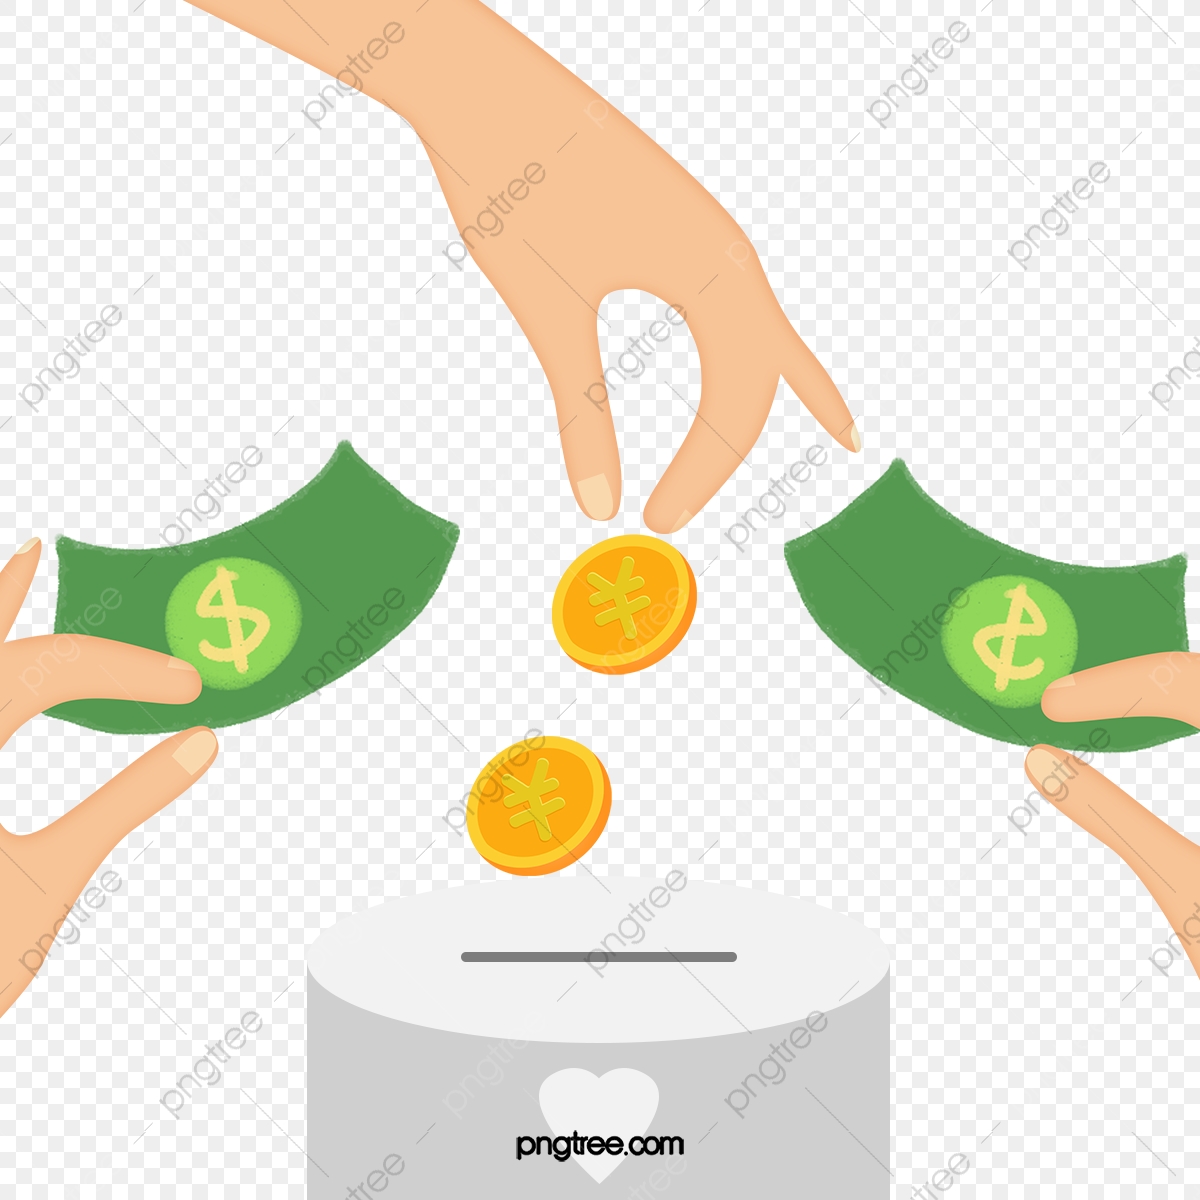 fundraising clipart paper money